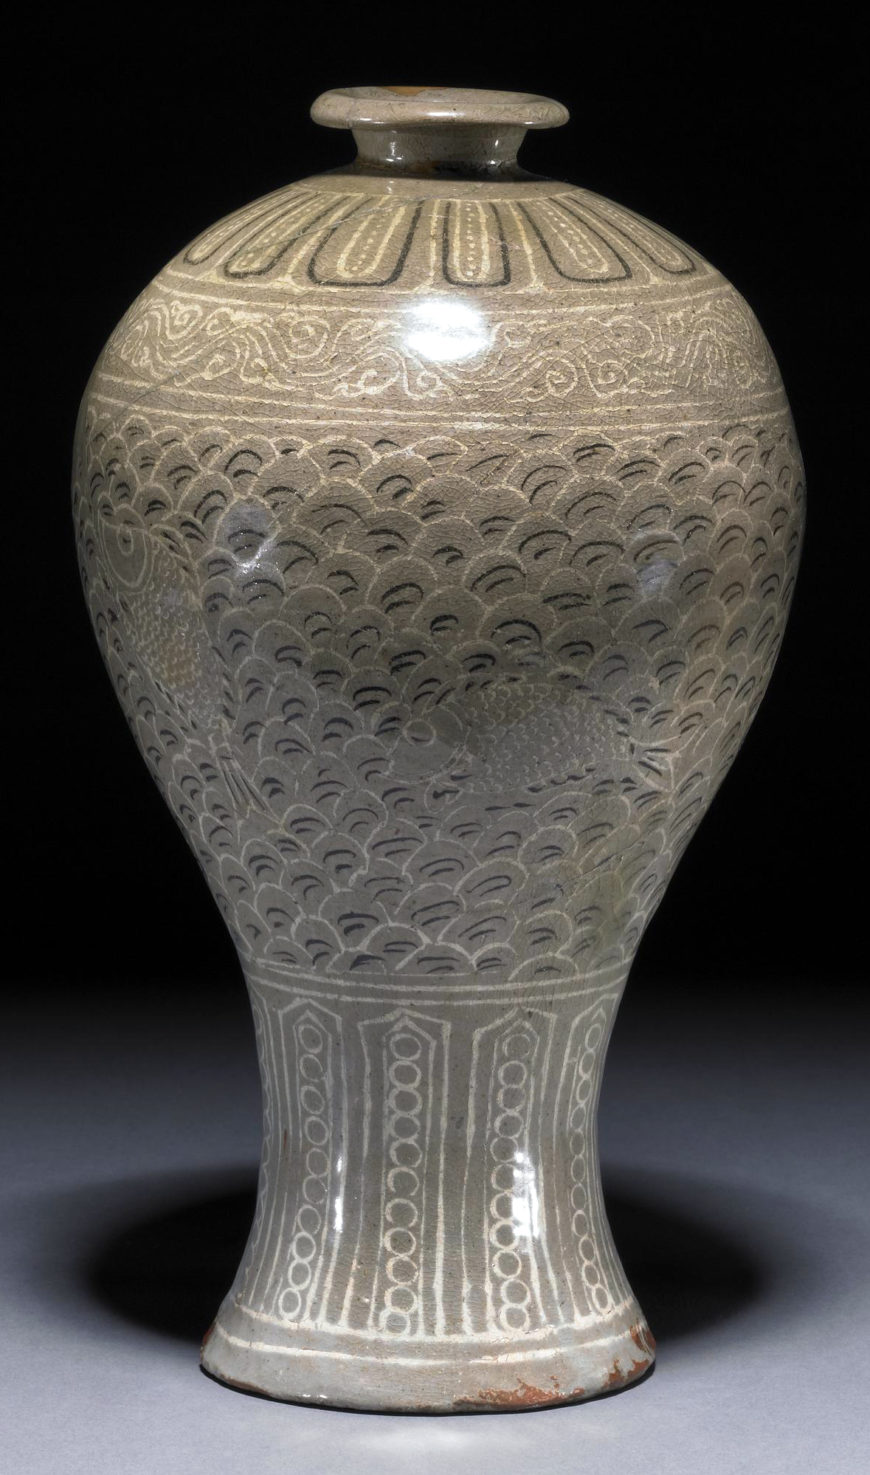 Punchong ware maebyong vase From Korea Early Choson dynasty, 15th century AD